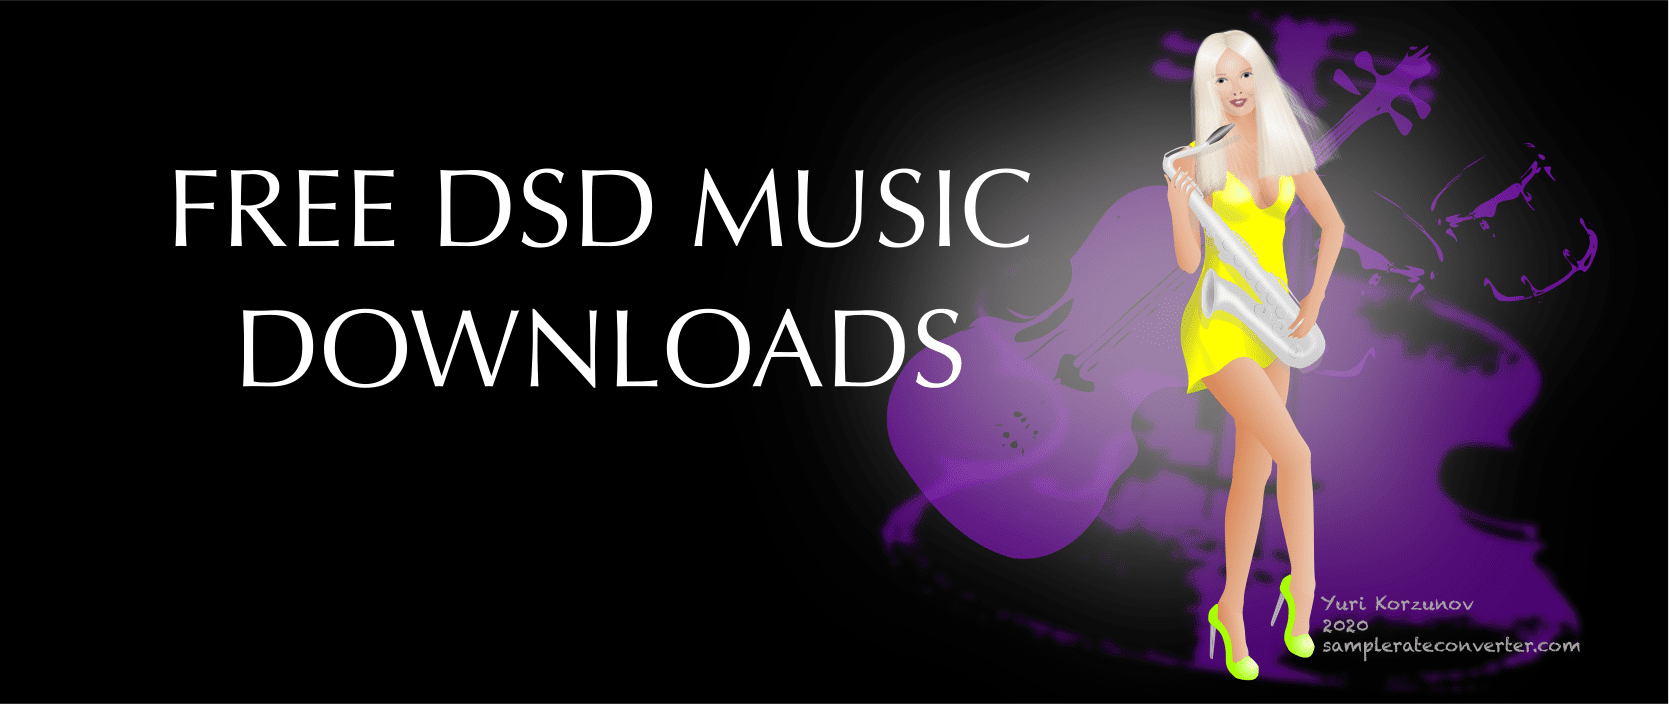 free dsd downloads